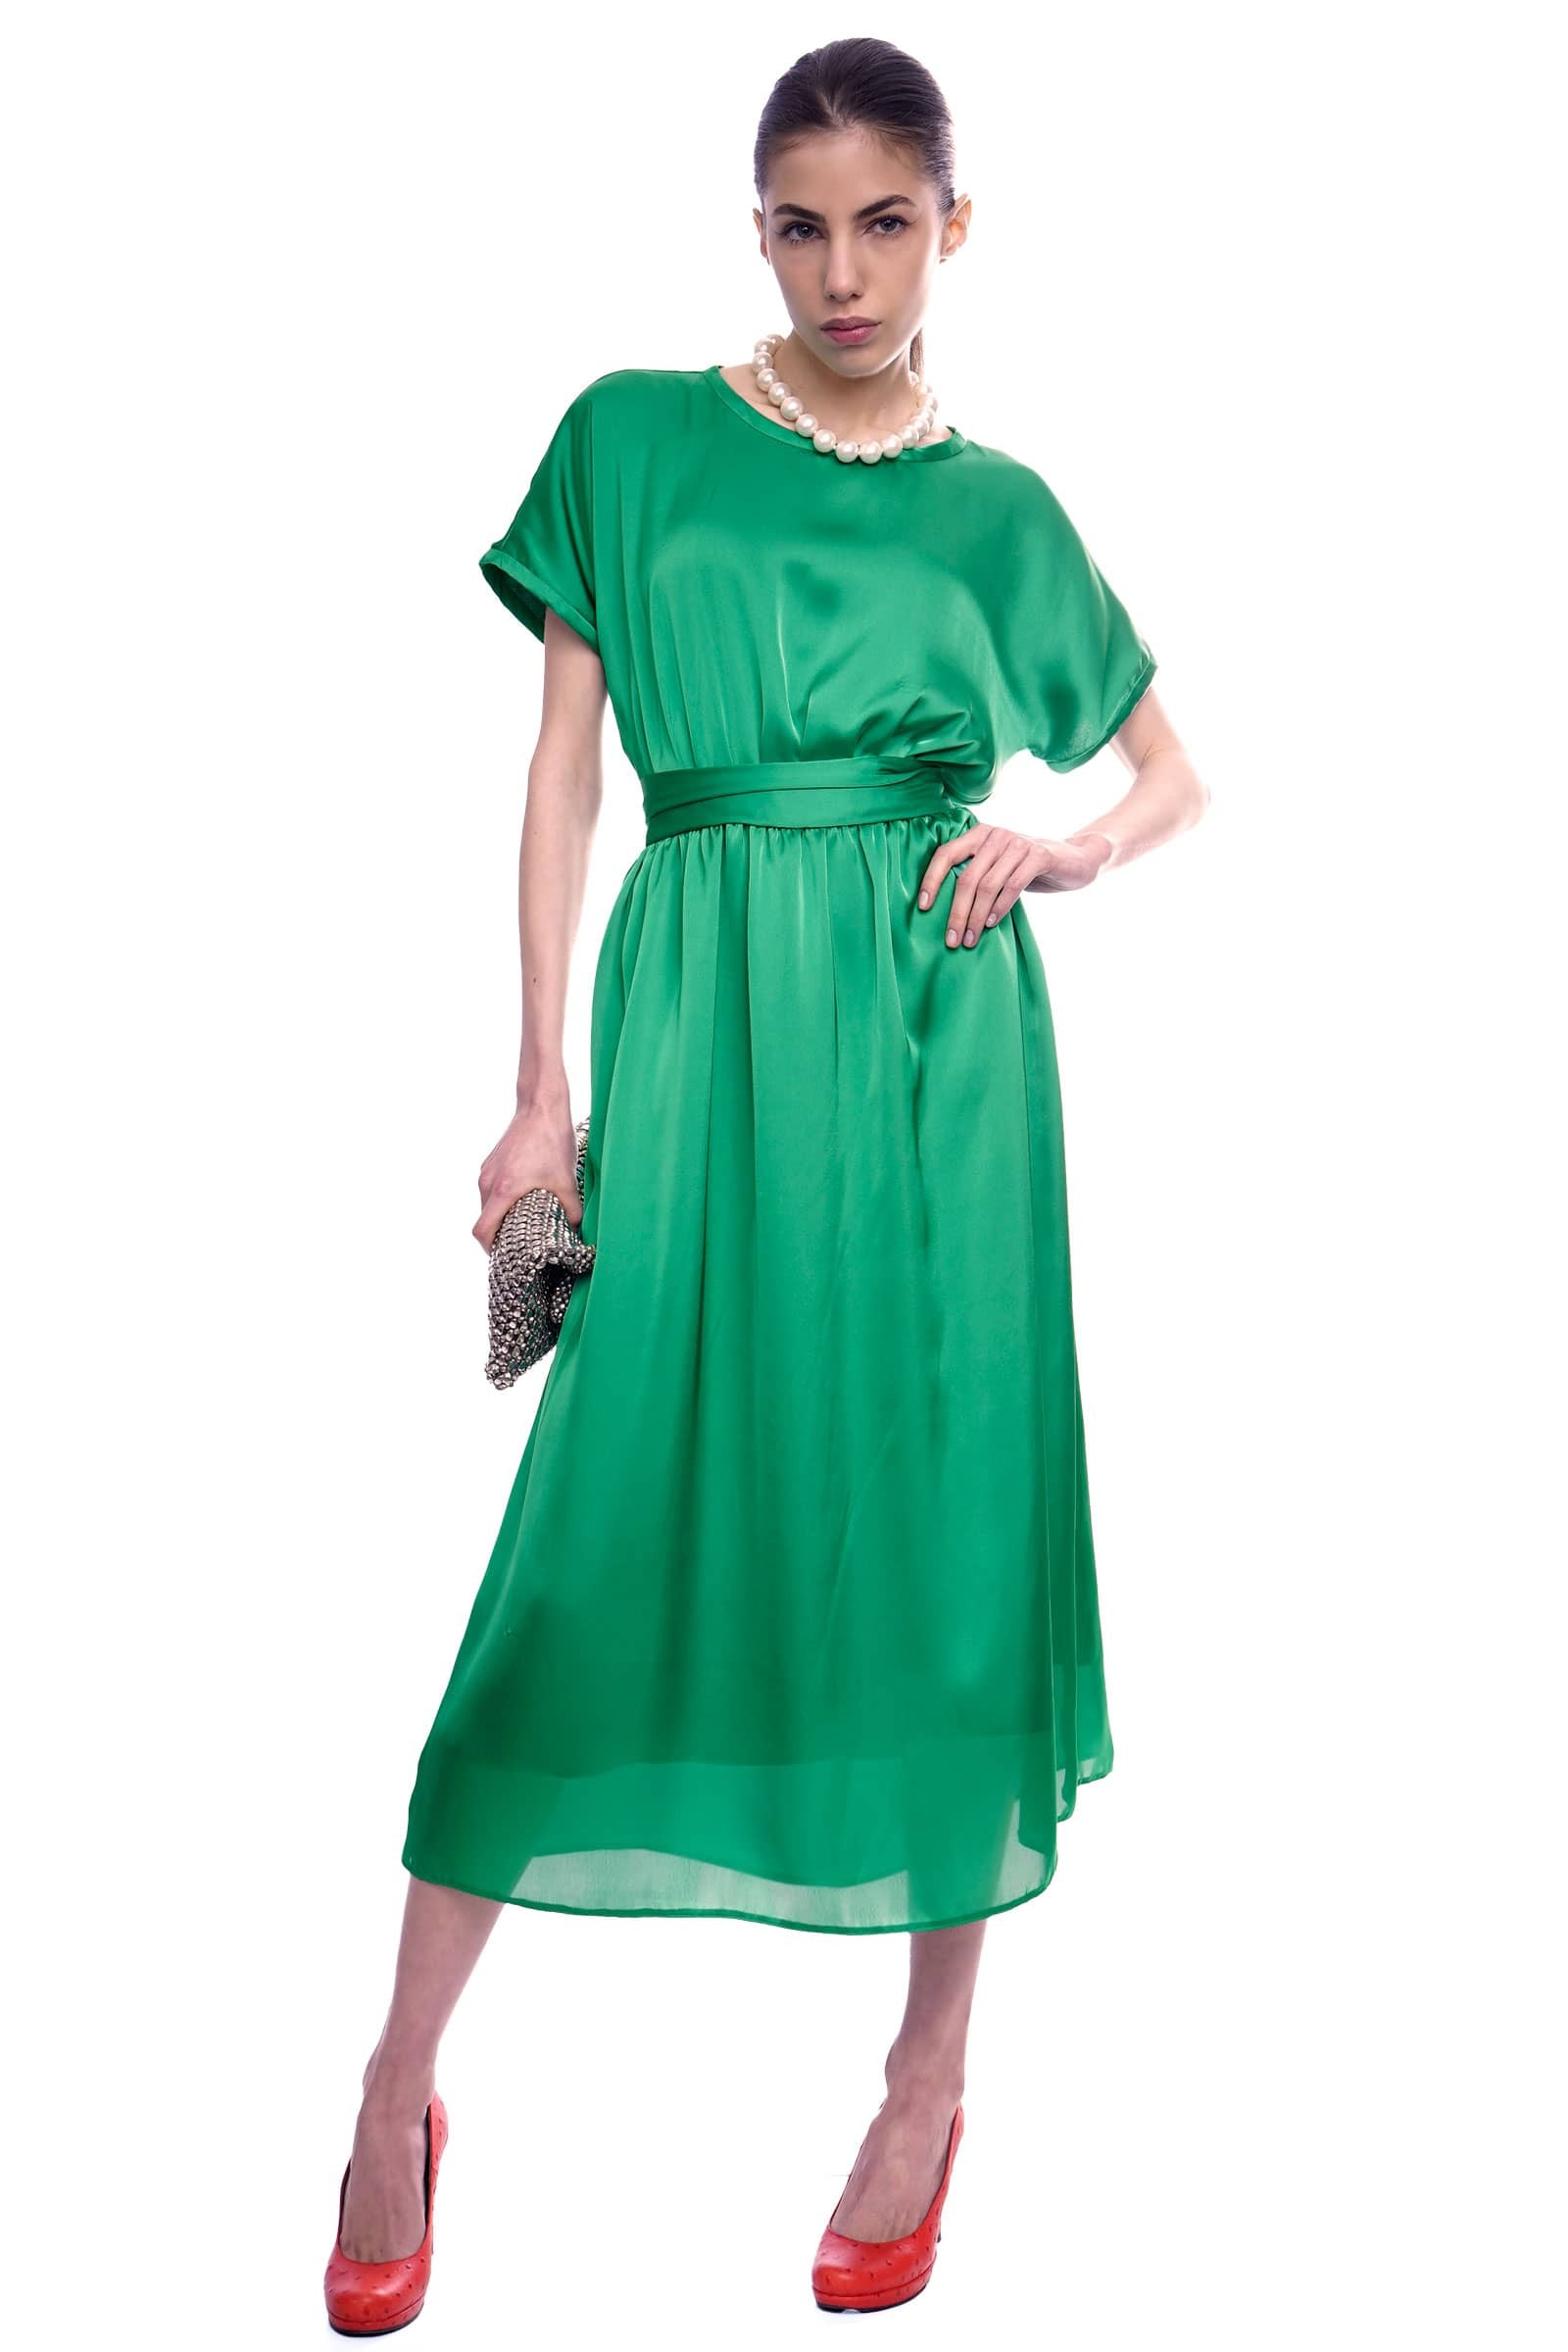 Green straight dress